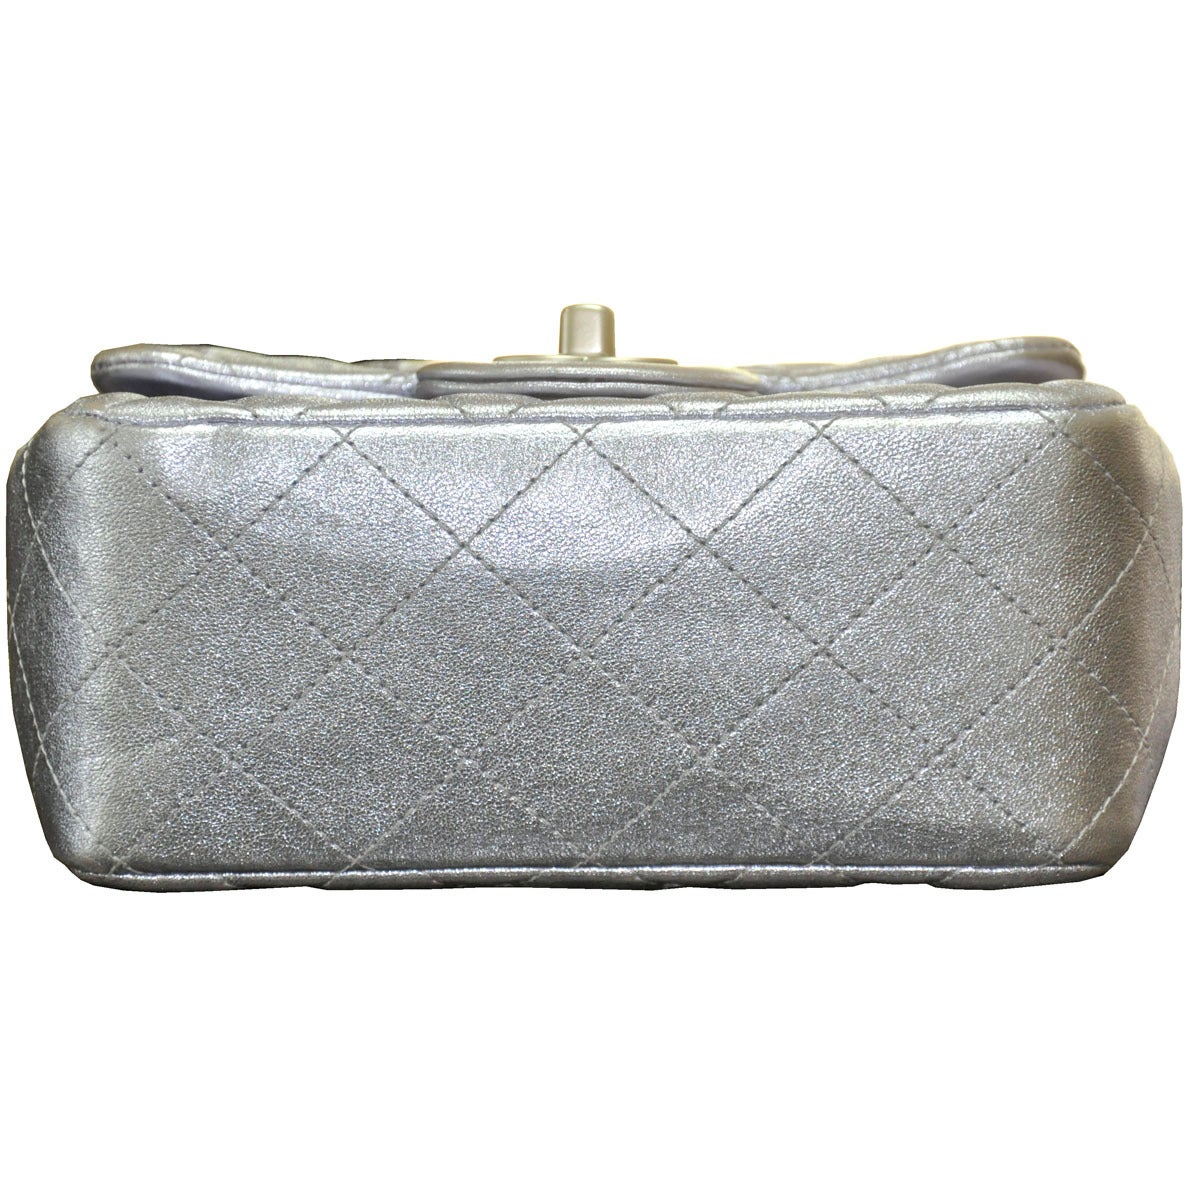 Chanel Lavender Metallic Leather Mini Flap Shoulder Bag Handbag 6